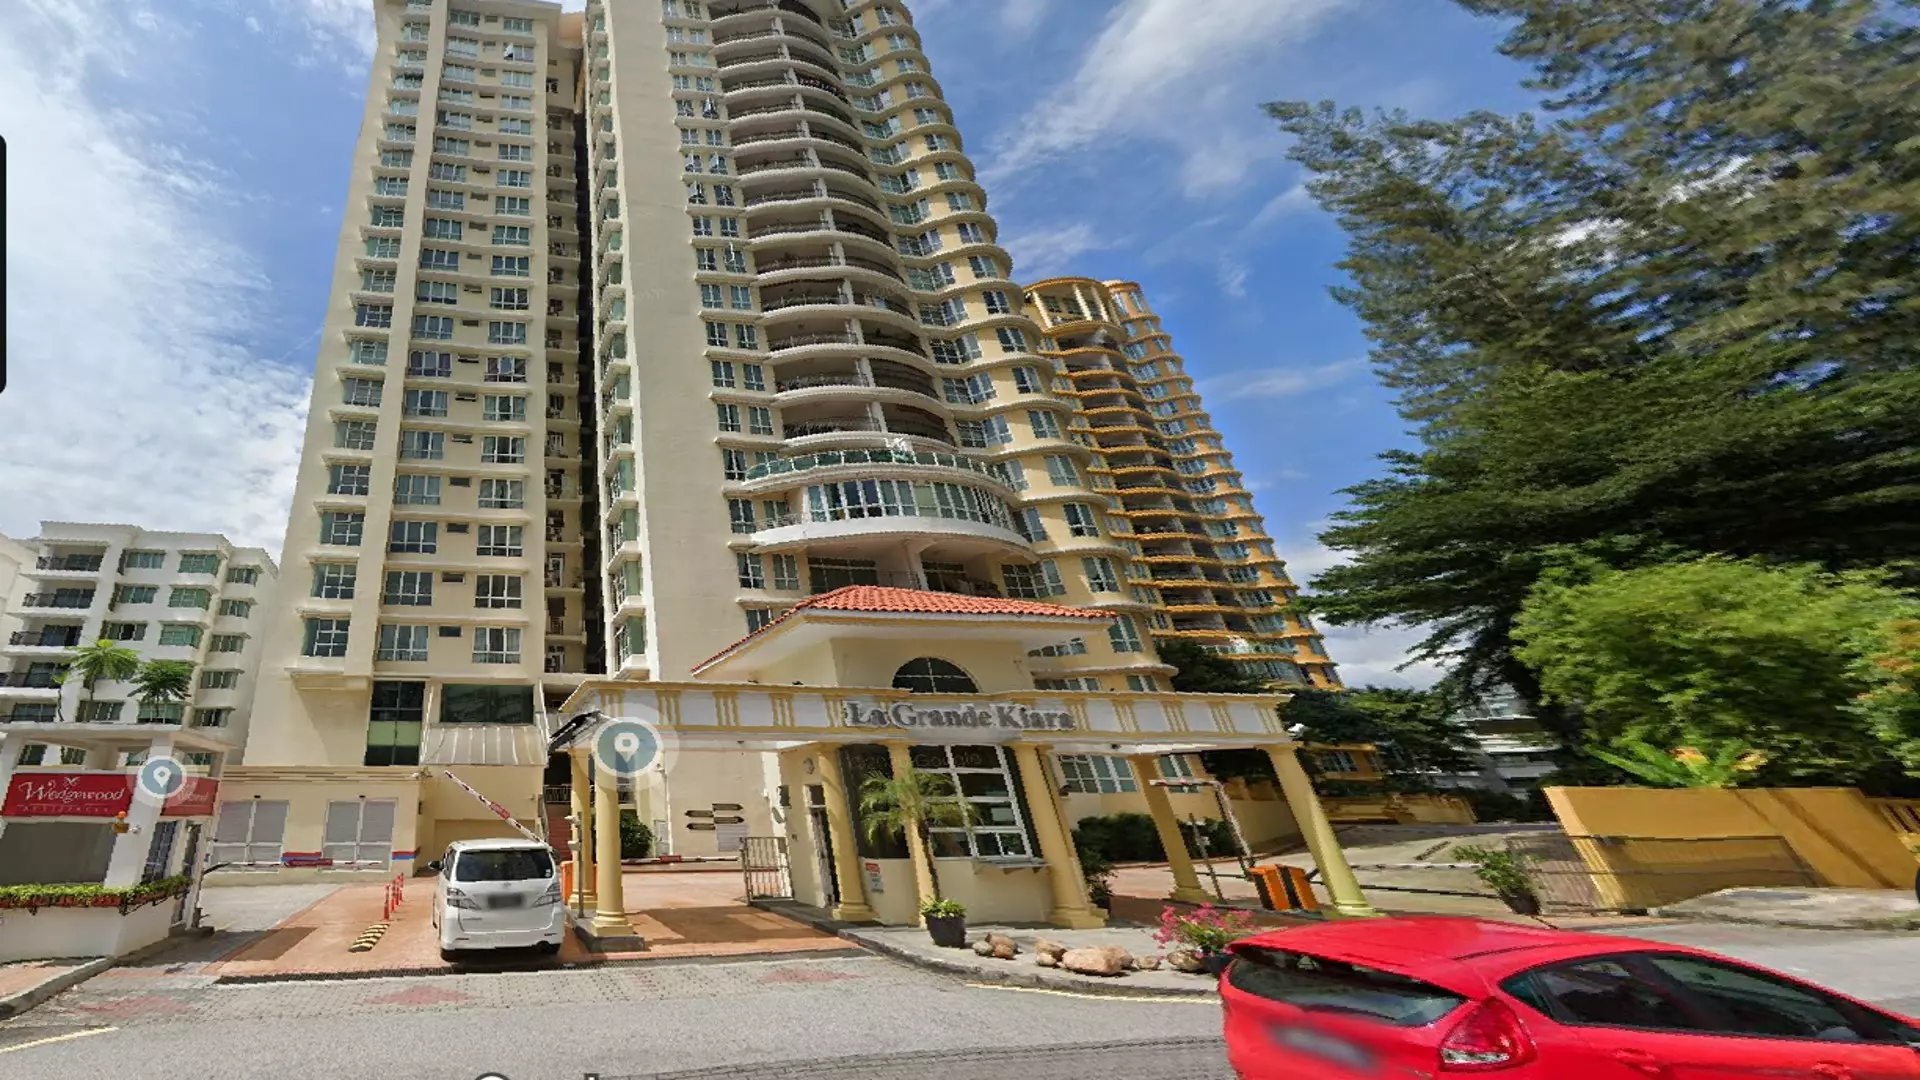 Condominium @ La Grande Kiara, Mont Kiara, Kuala Lumpur for Auction